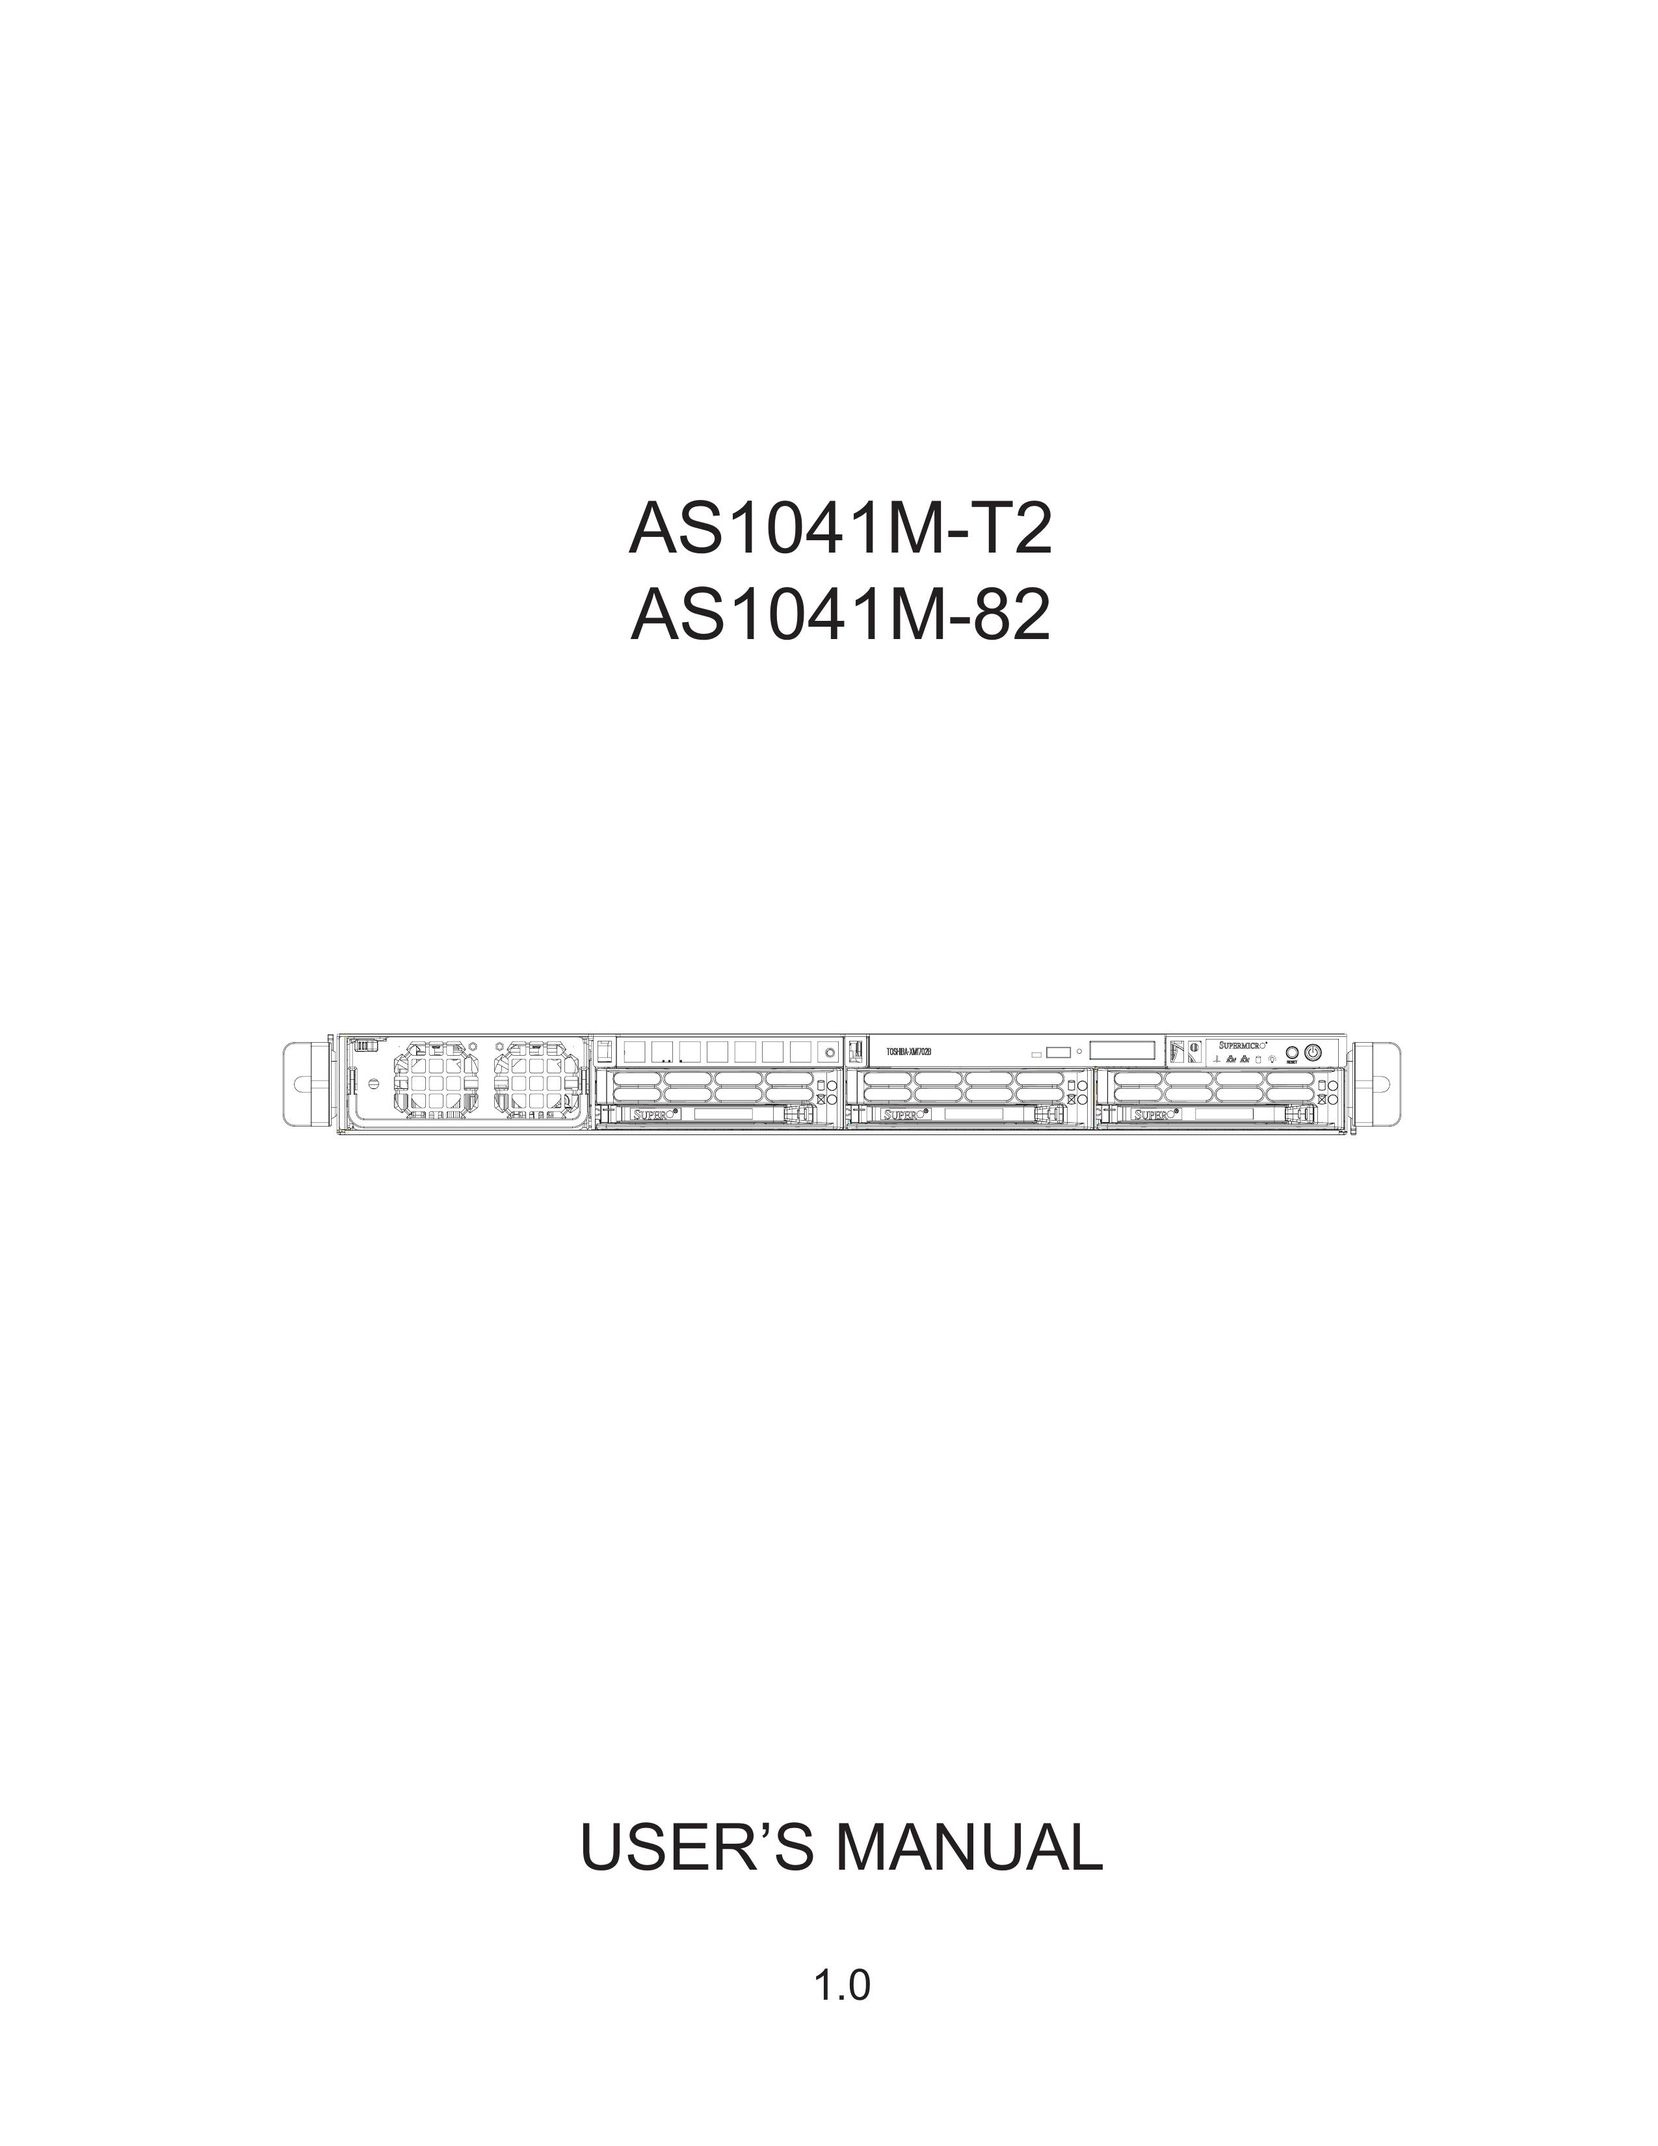 SUPER MICRO Computer AS1041M-T2 Server User Manual